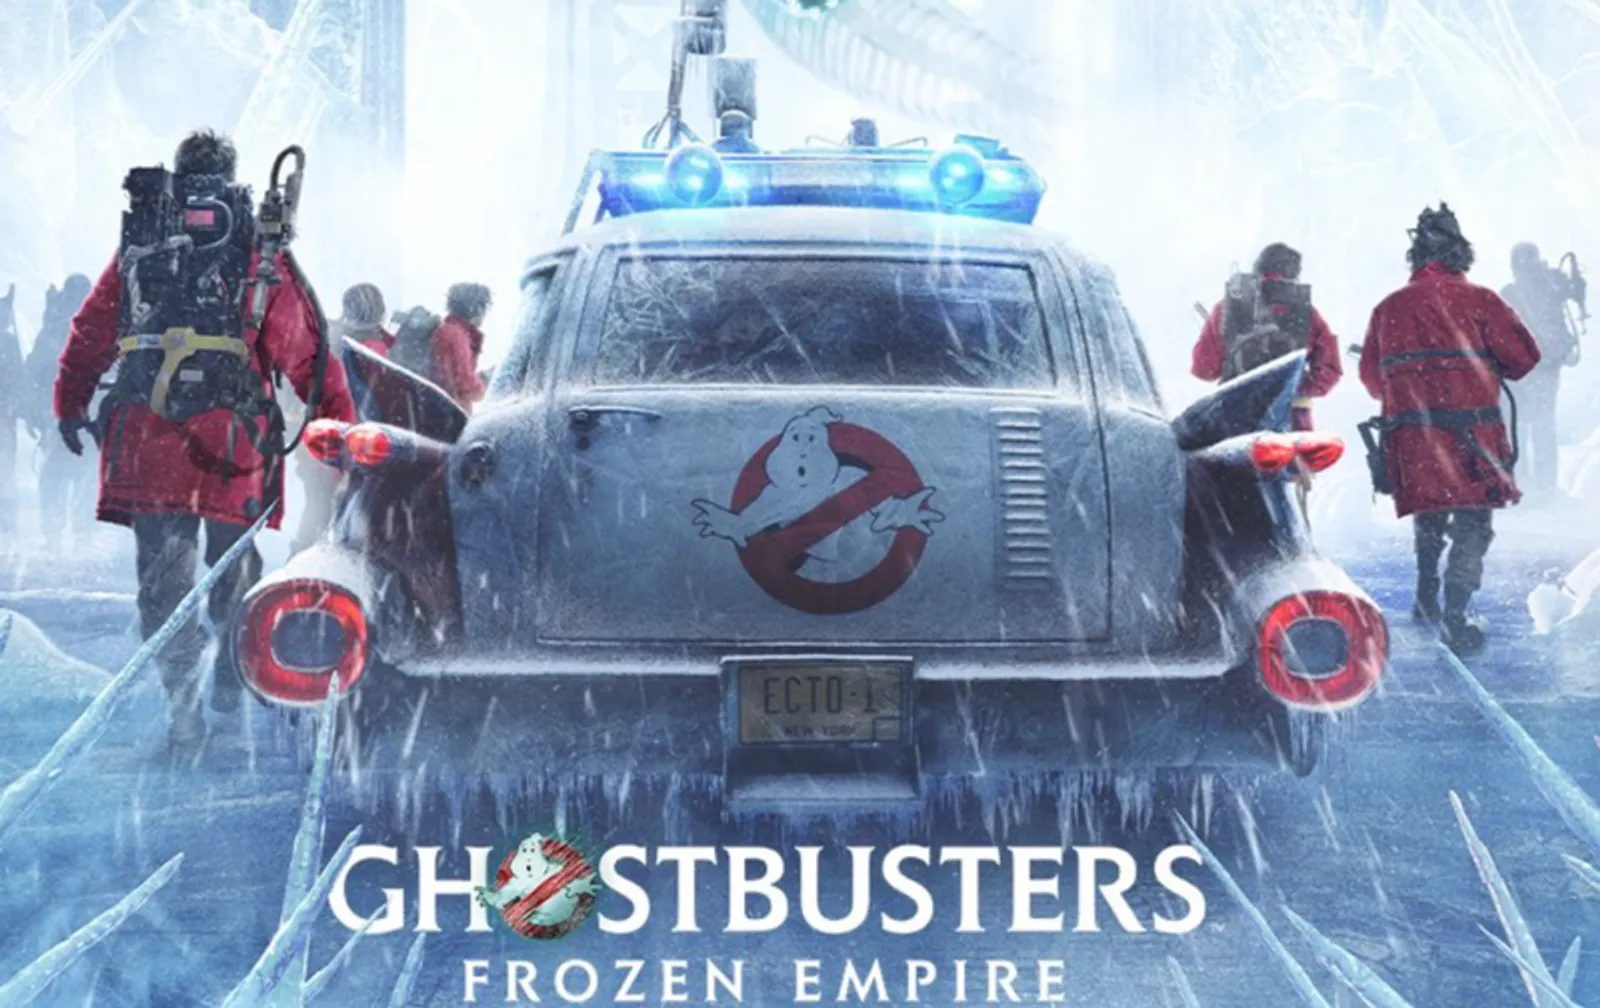 Kolaborasi Ekslusif Kingston X 'Ghostbusters: Frozen Empire'